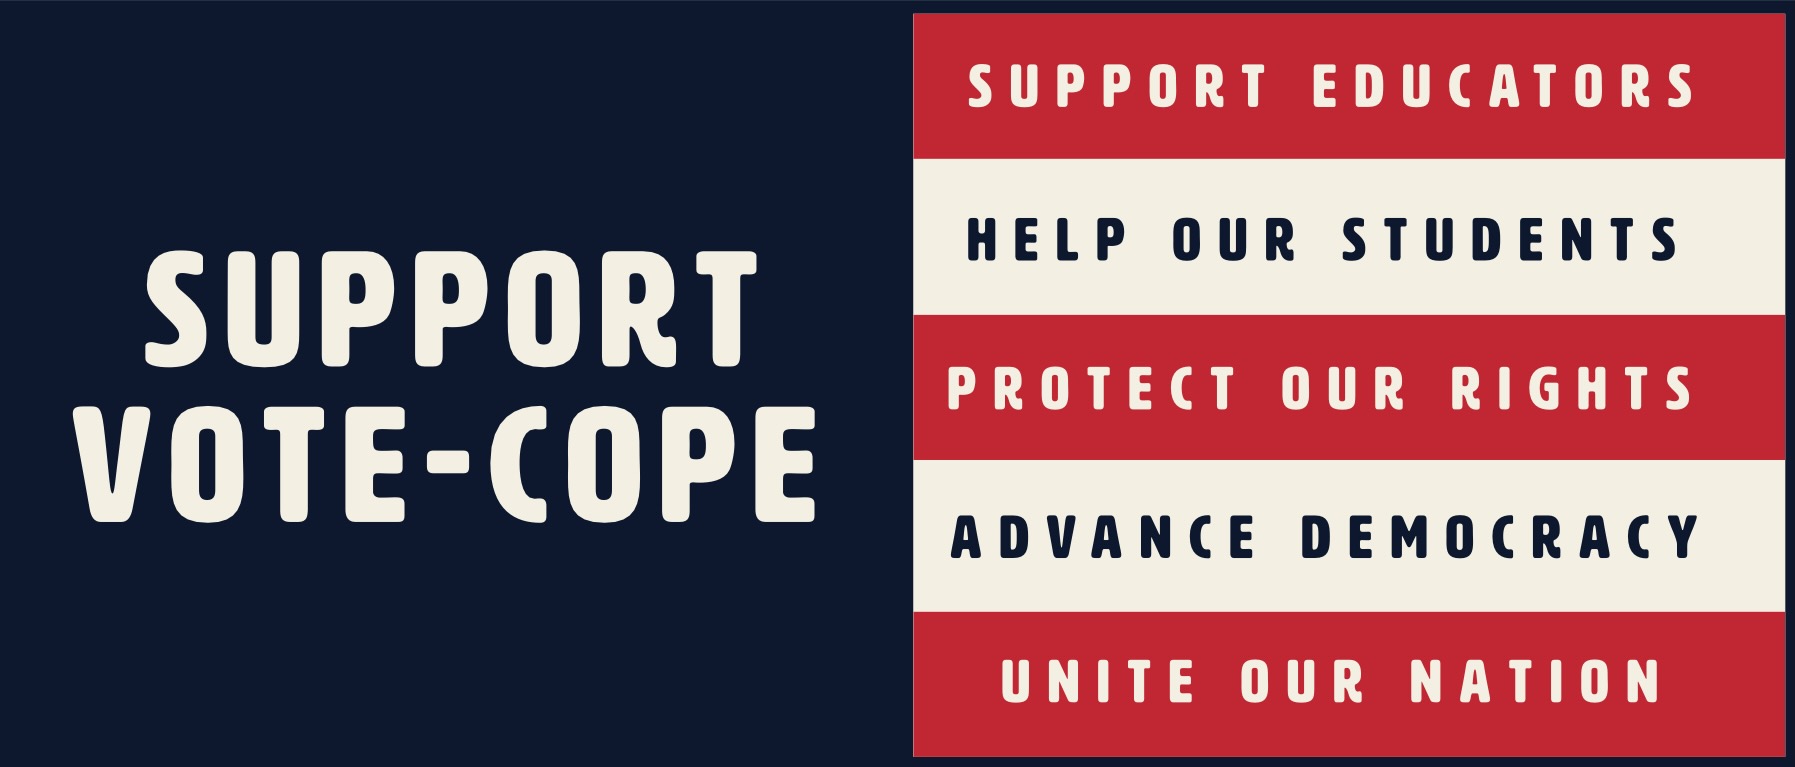 Support Vote - Cope